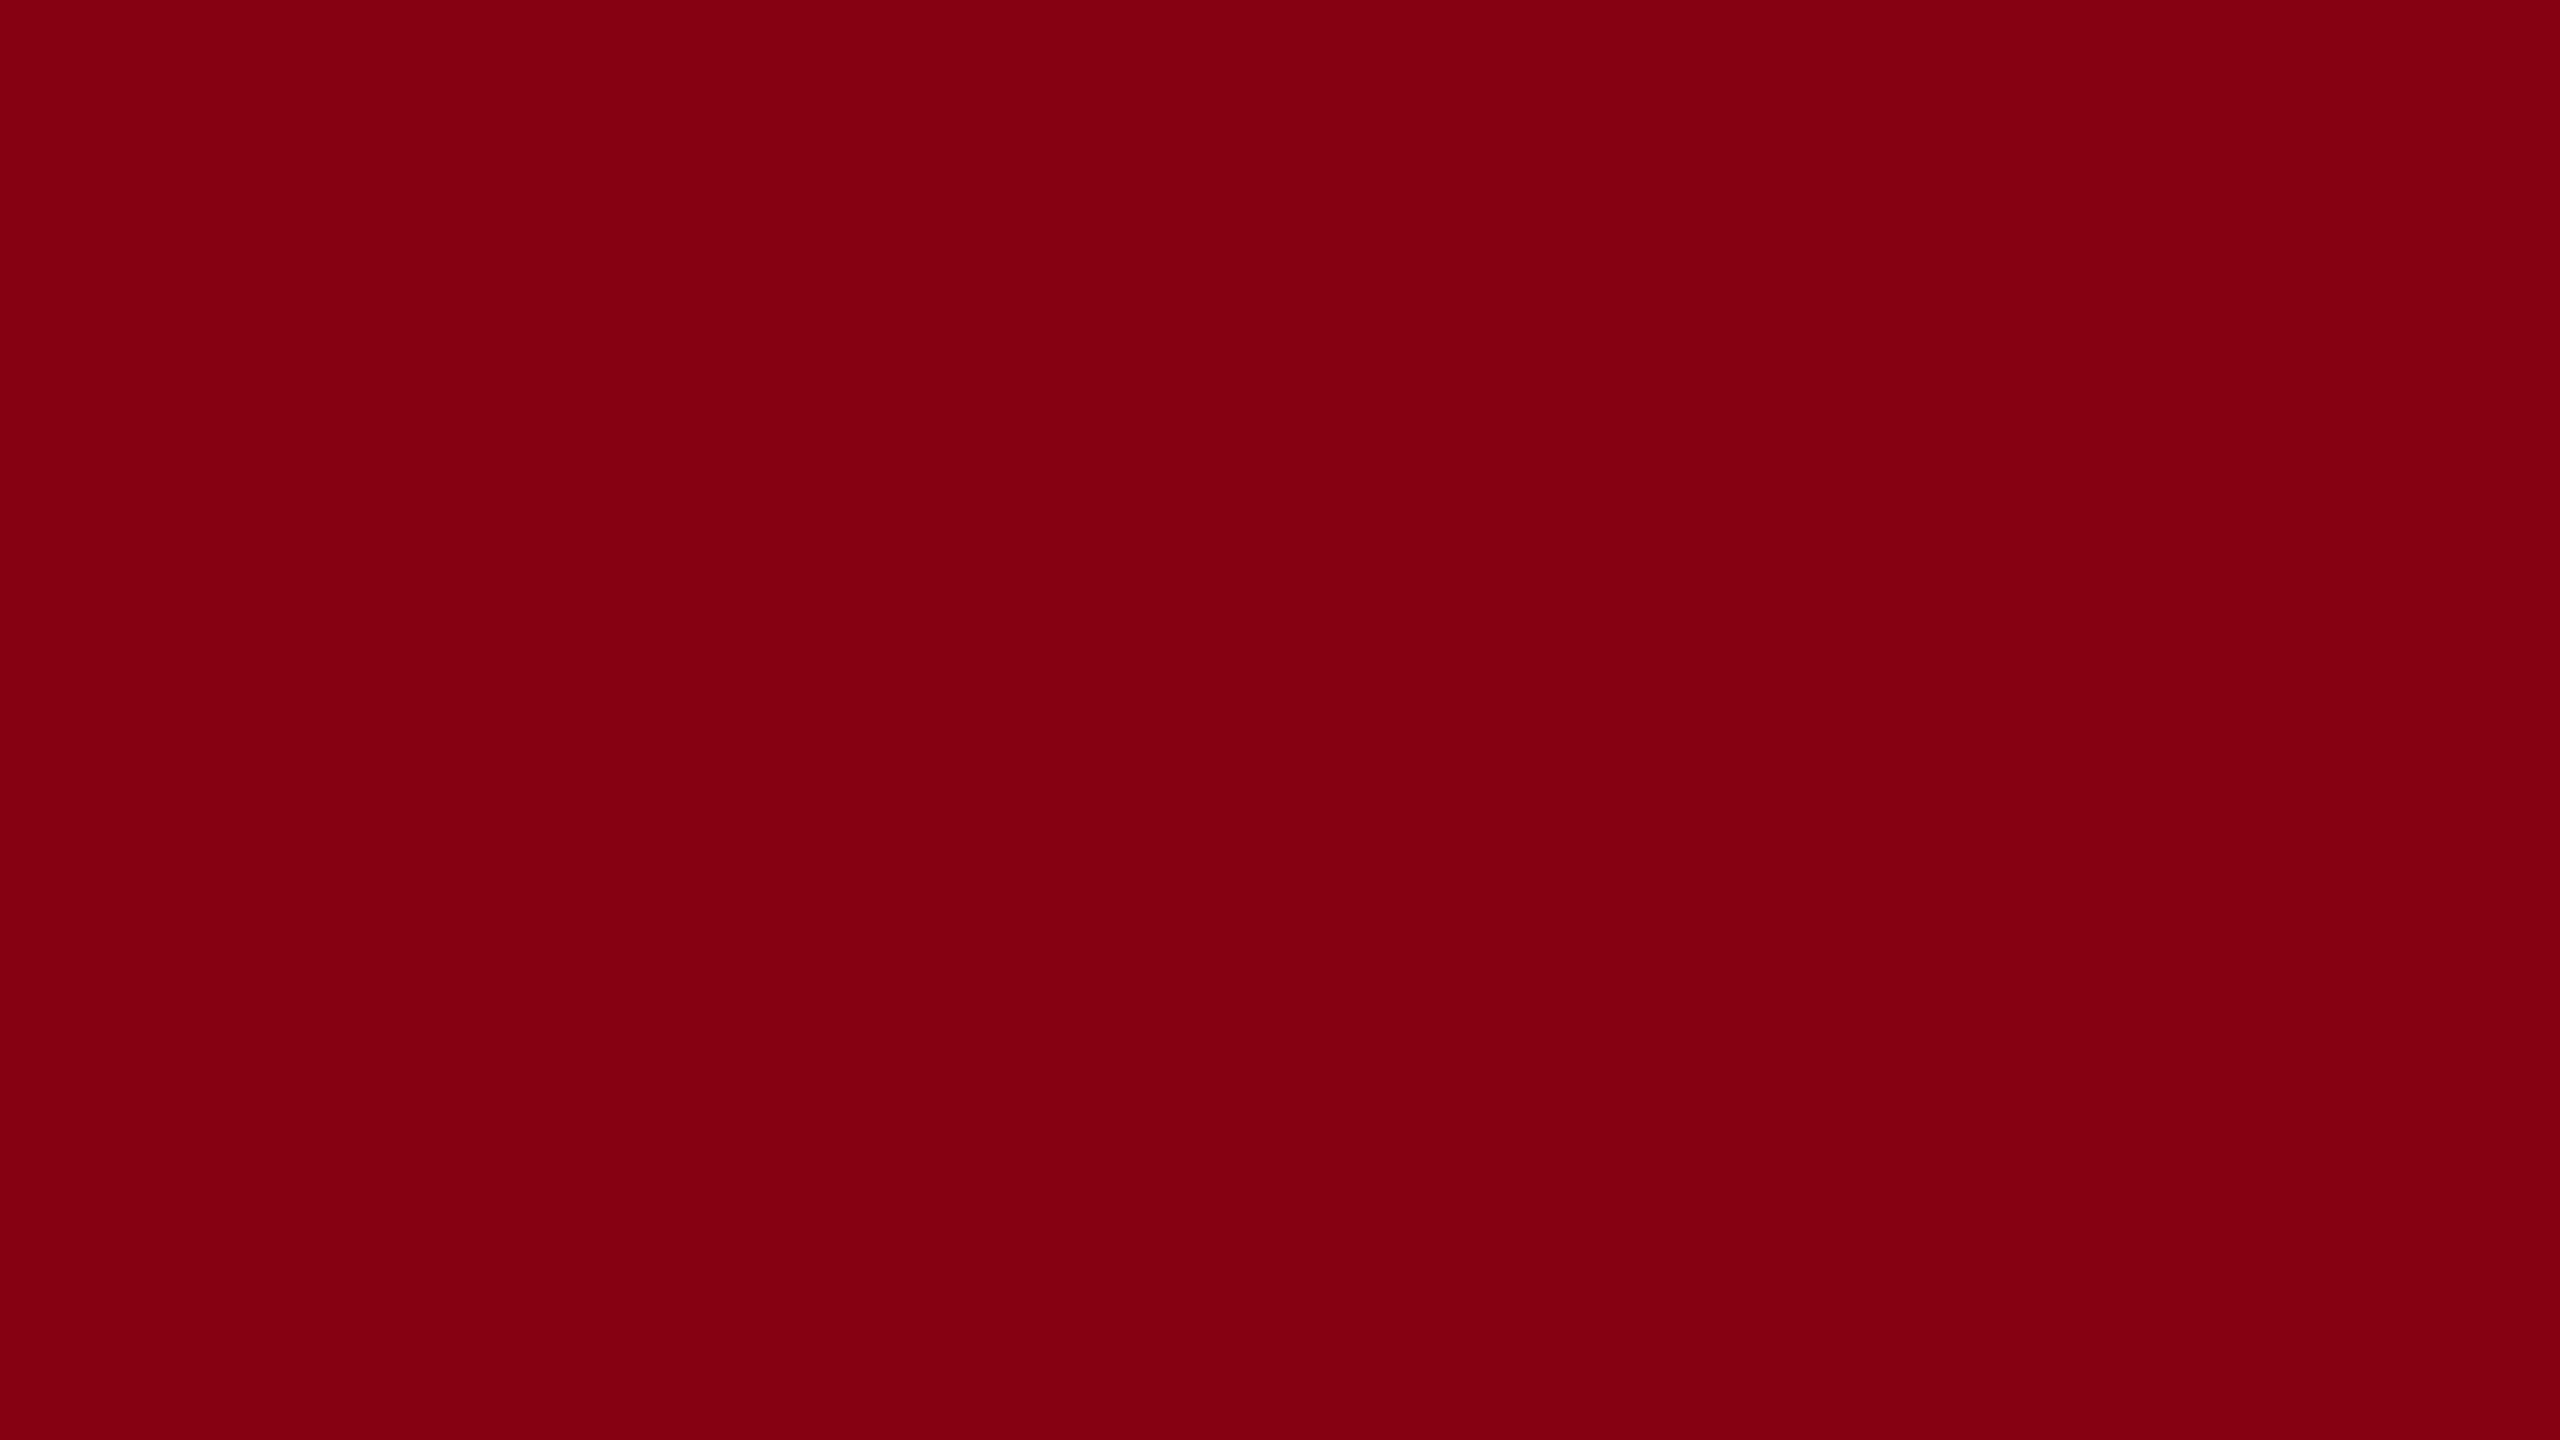 2560x1440 Red Devil Solid Color Background